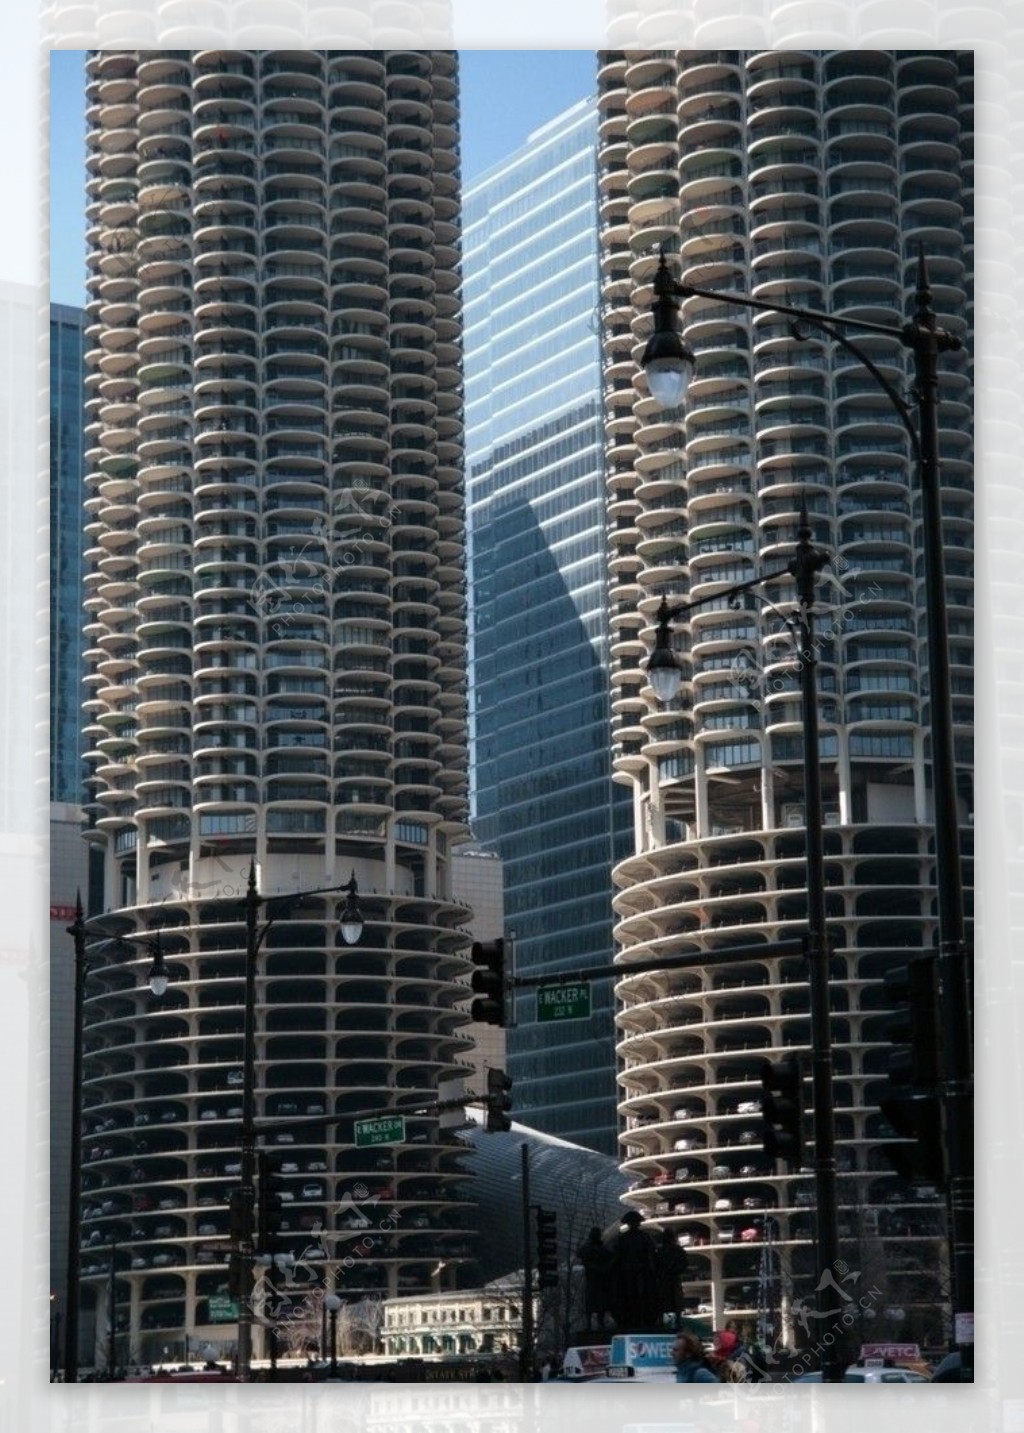 File:Chicago Sears Tower.jpg - Wikipedia